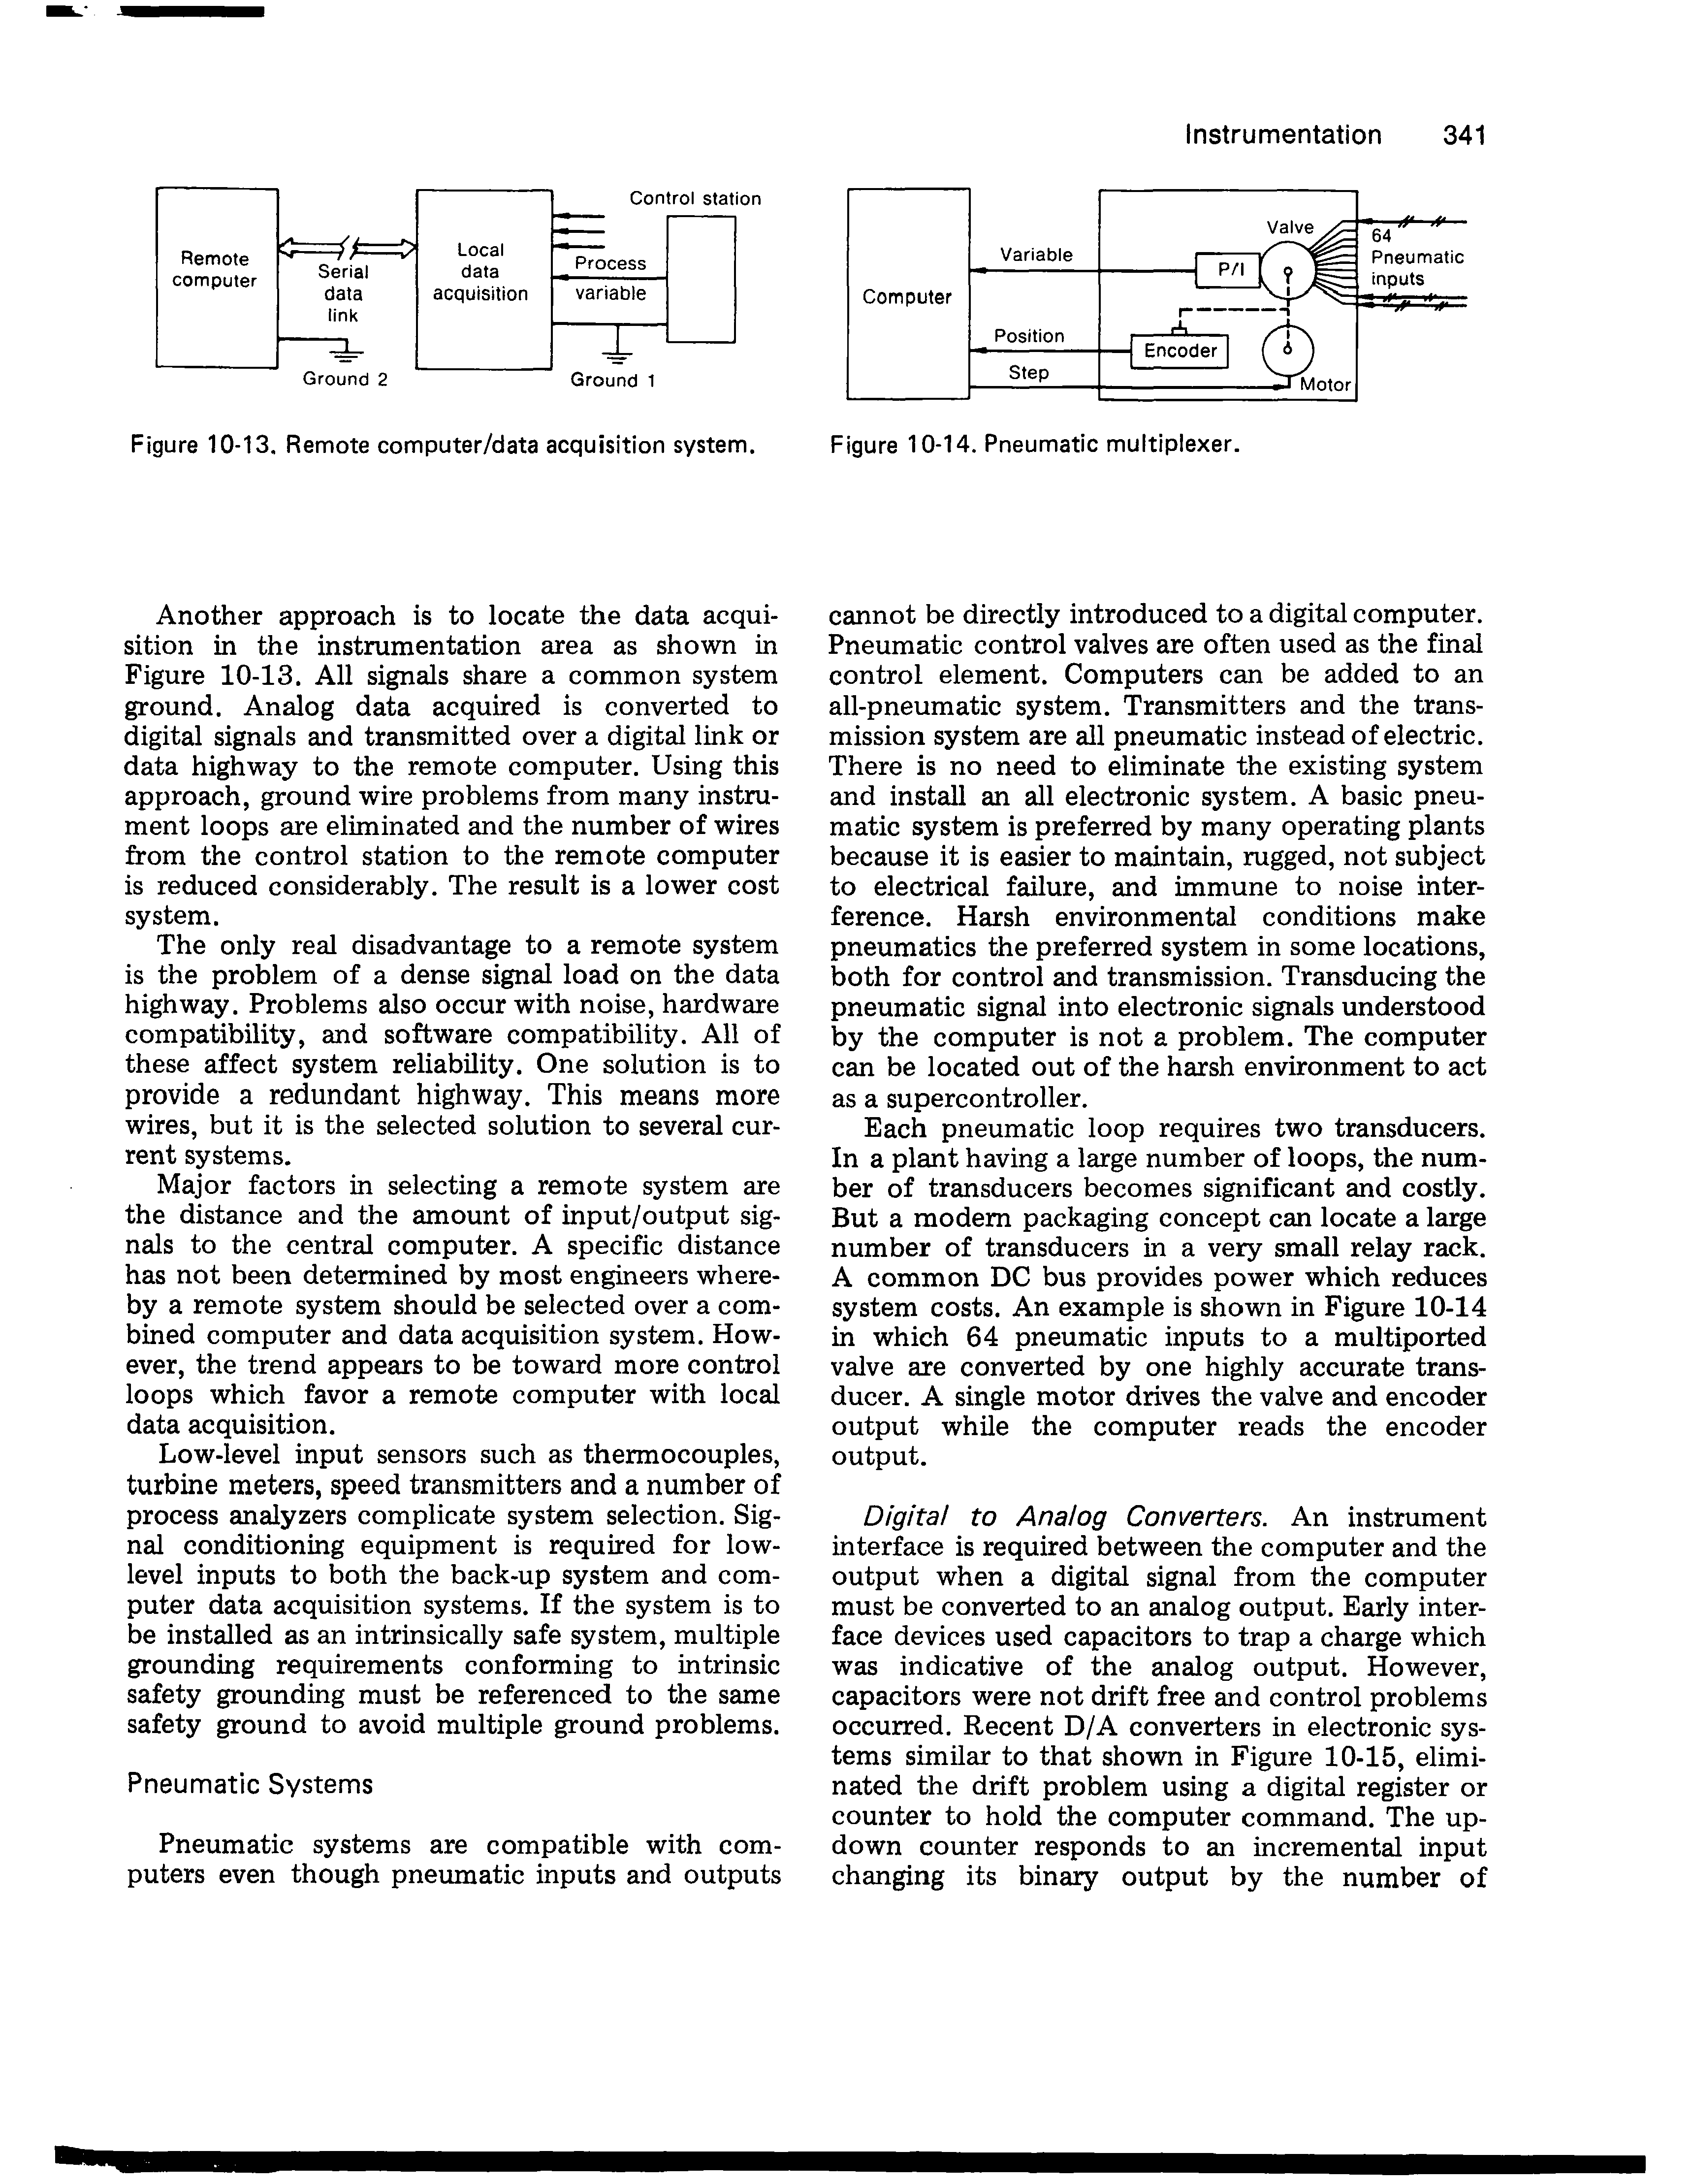 Figure 10-13. Remote computer/data acquisition system.